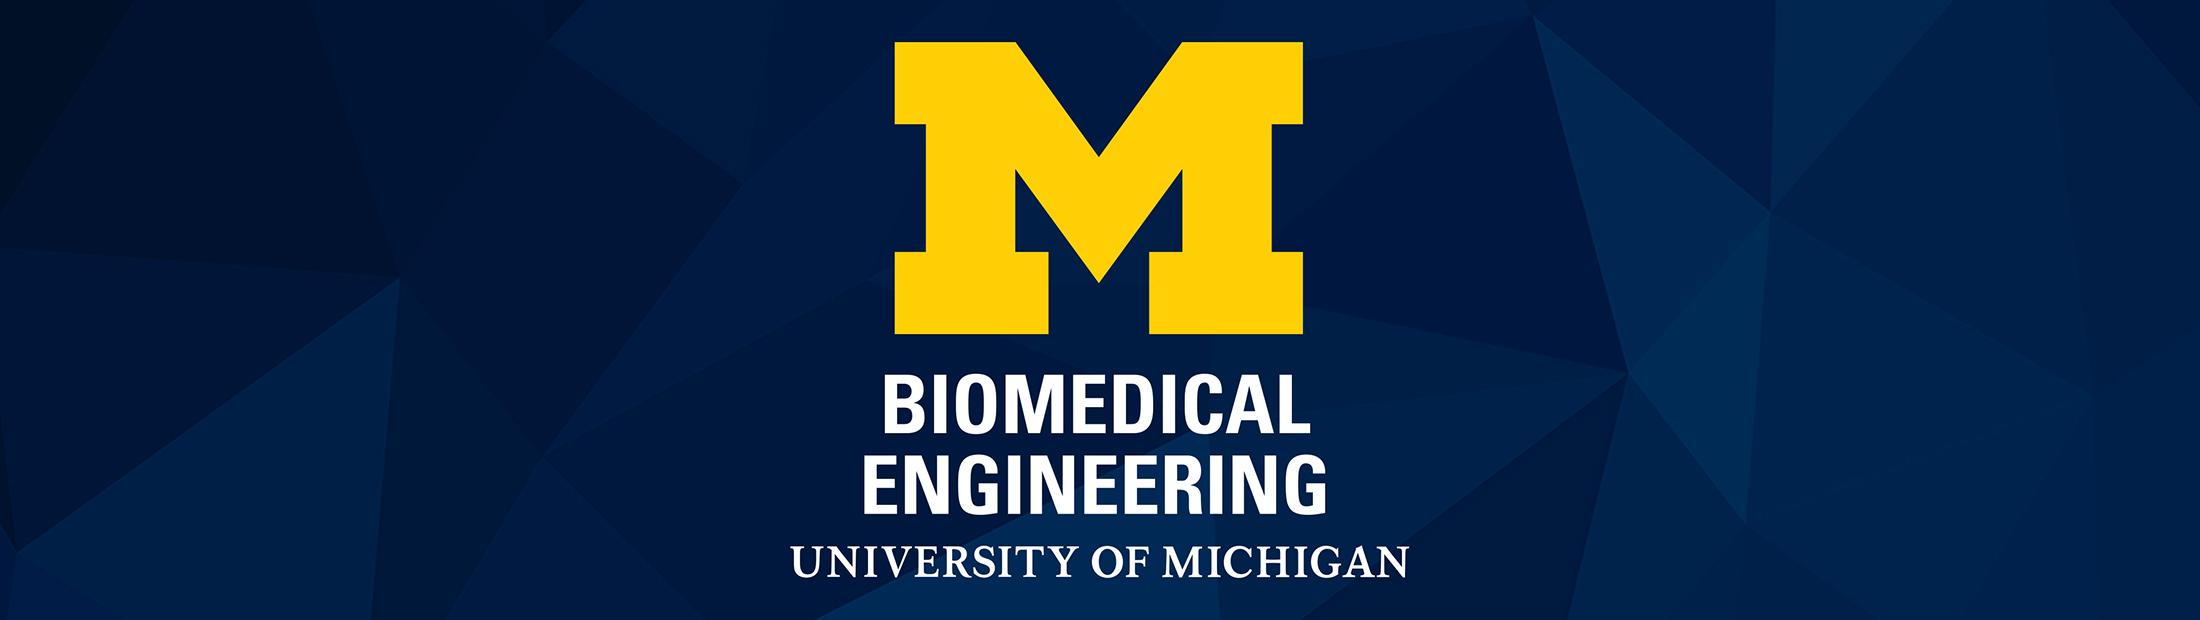 logo image of biomedical engineering of university of michigan